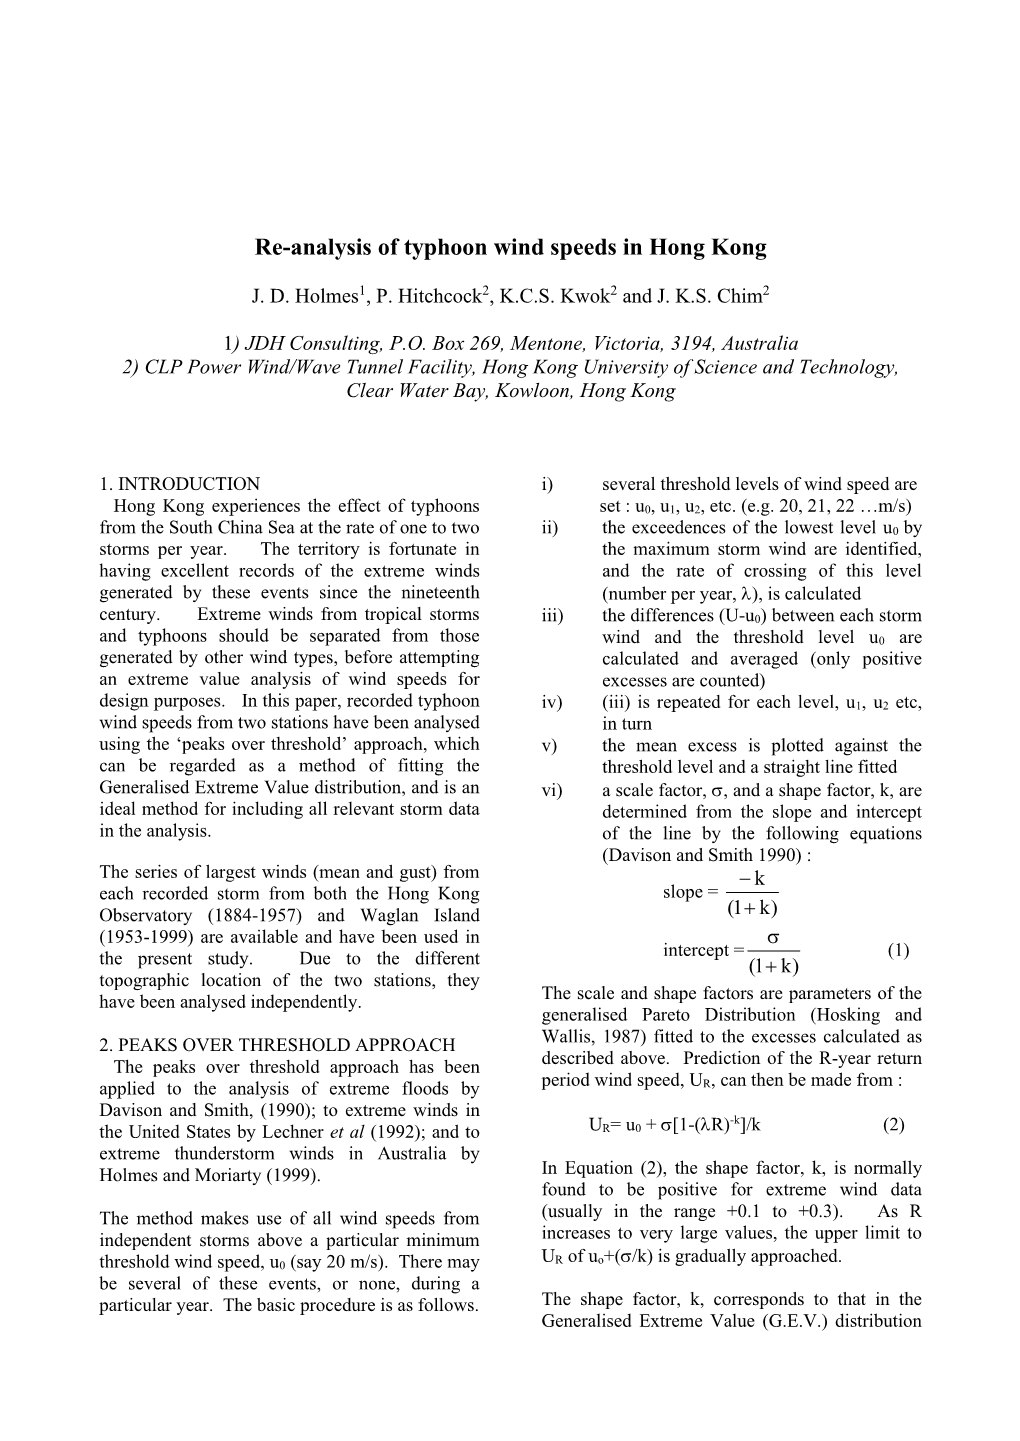 Re-Analysis of Typhoon Wind Speeds in Hong Kong